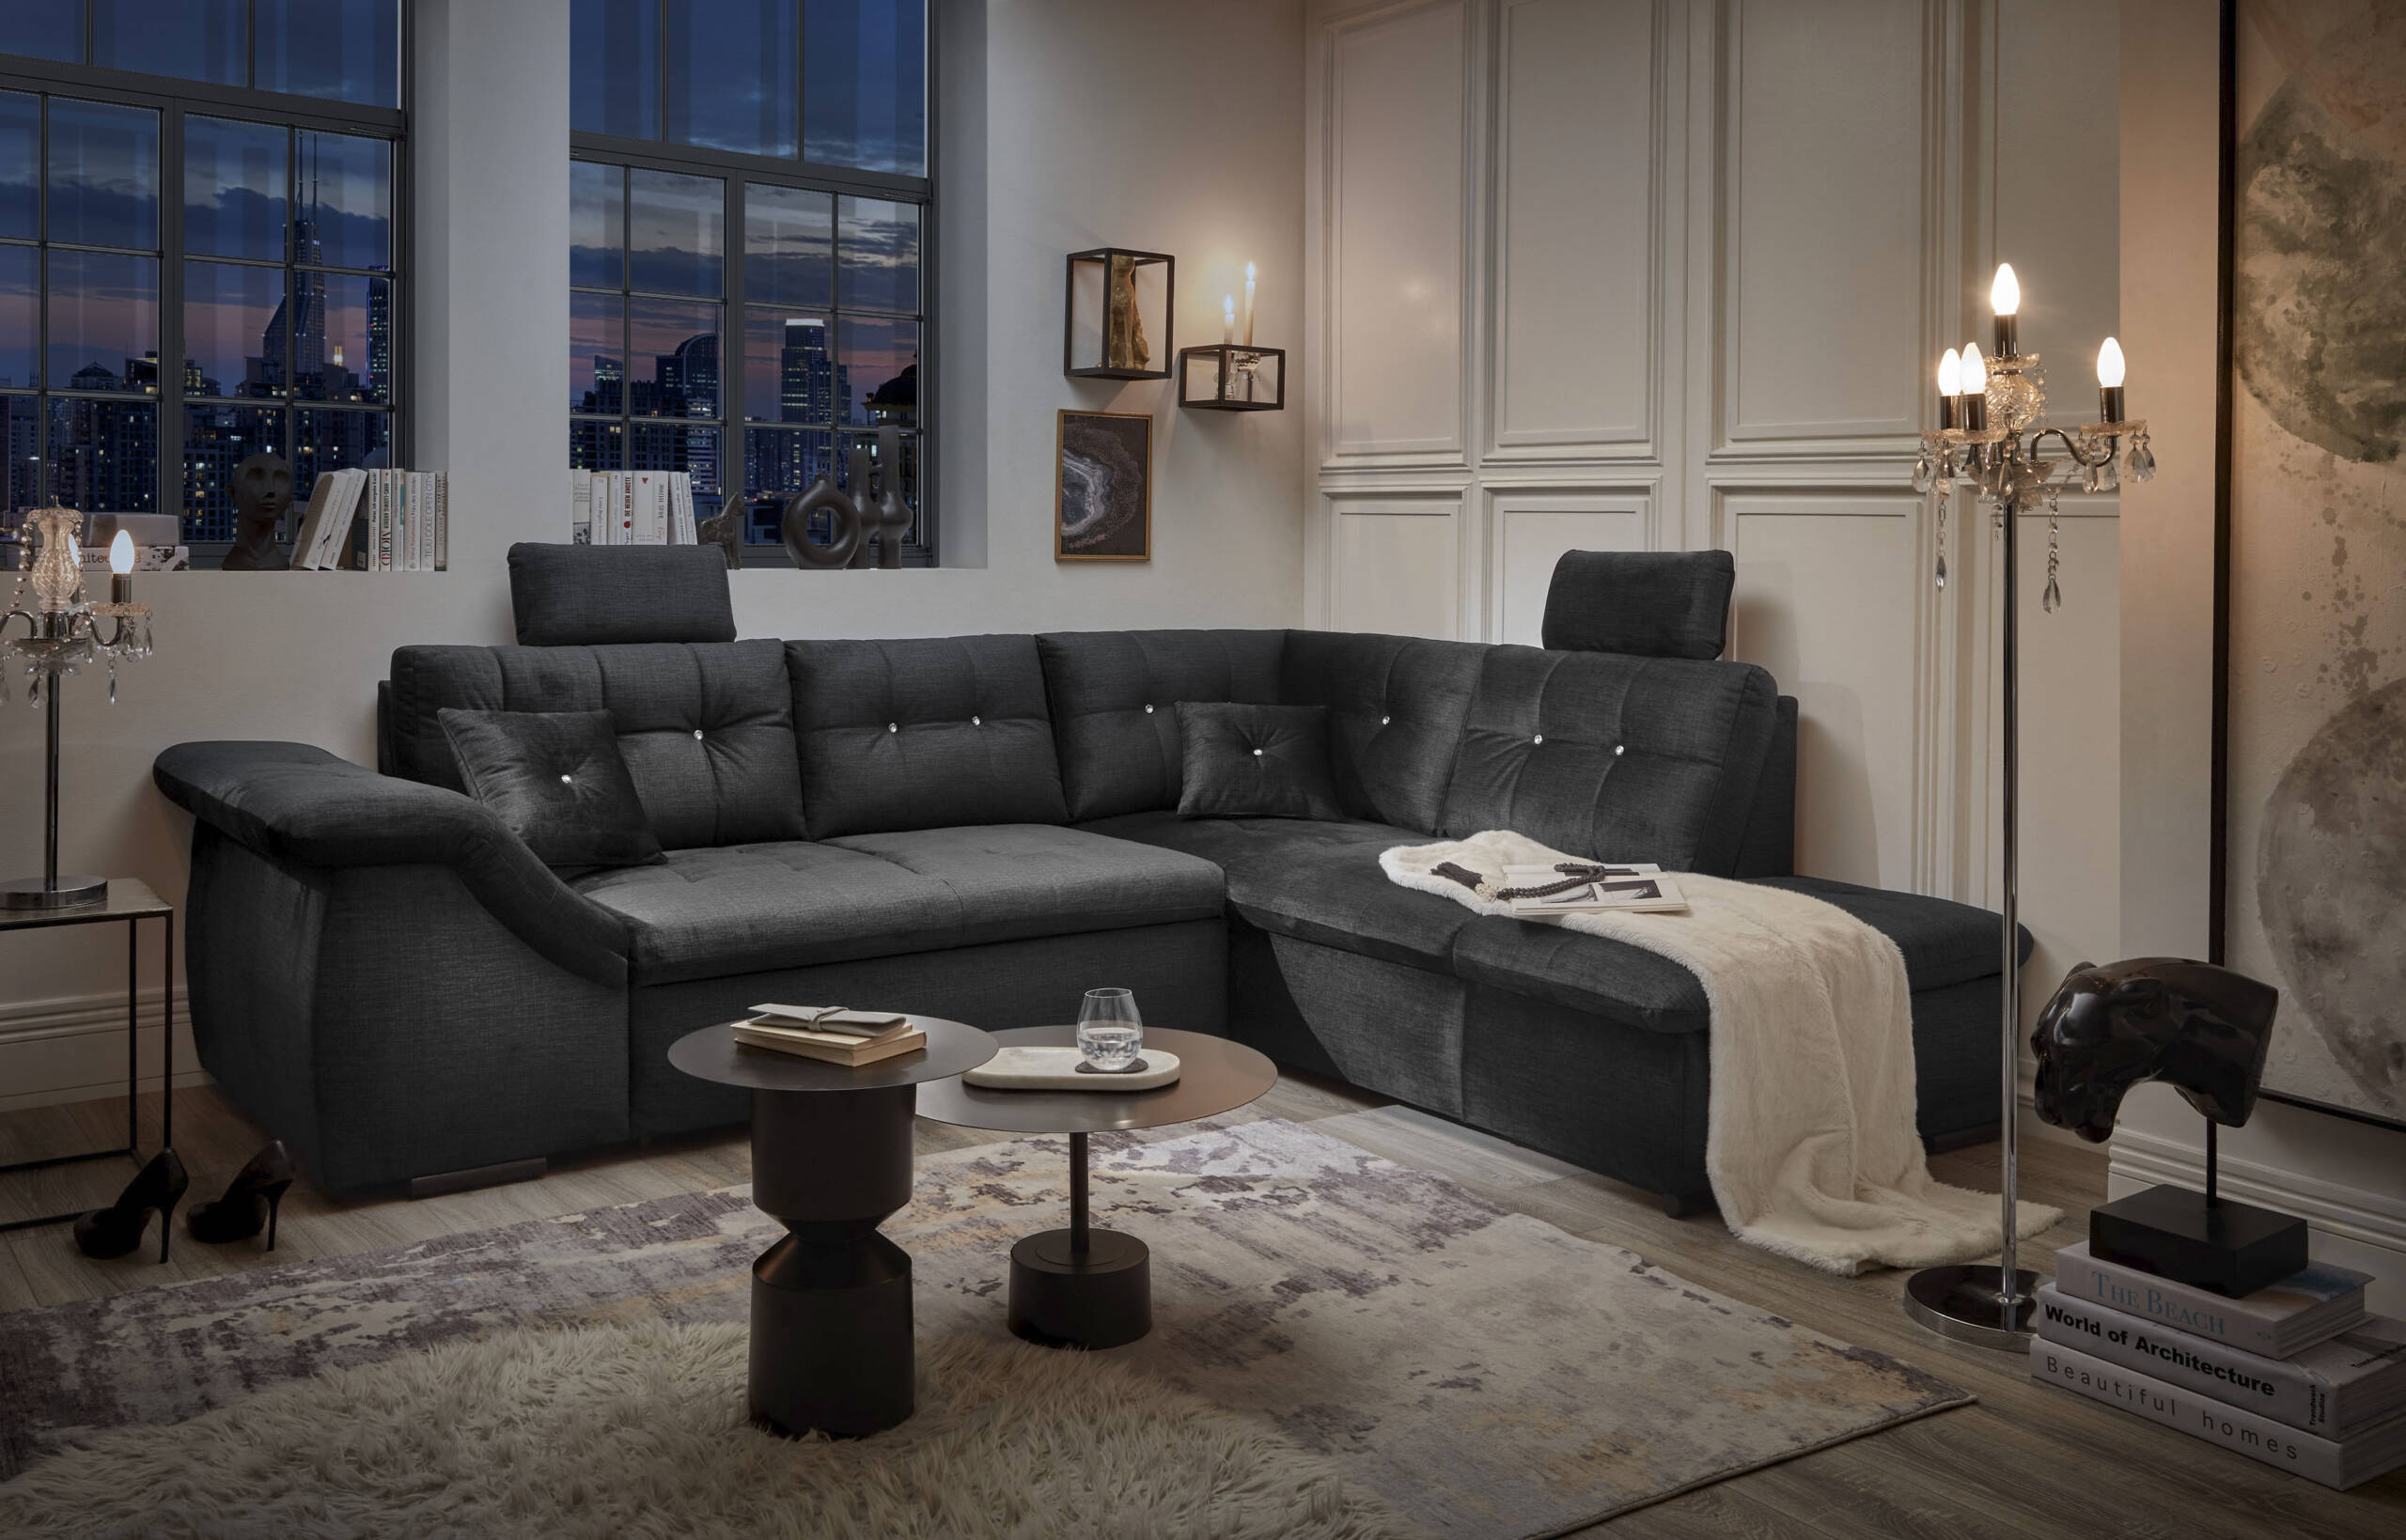 | bis Sale -70% Couch Outlet stylesoul ausziehbar |